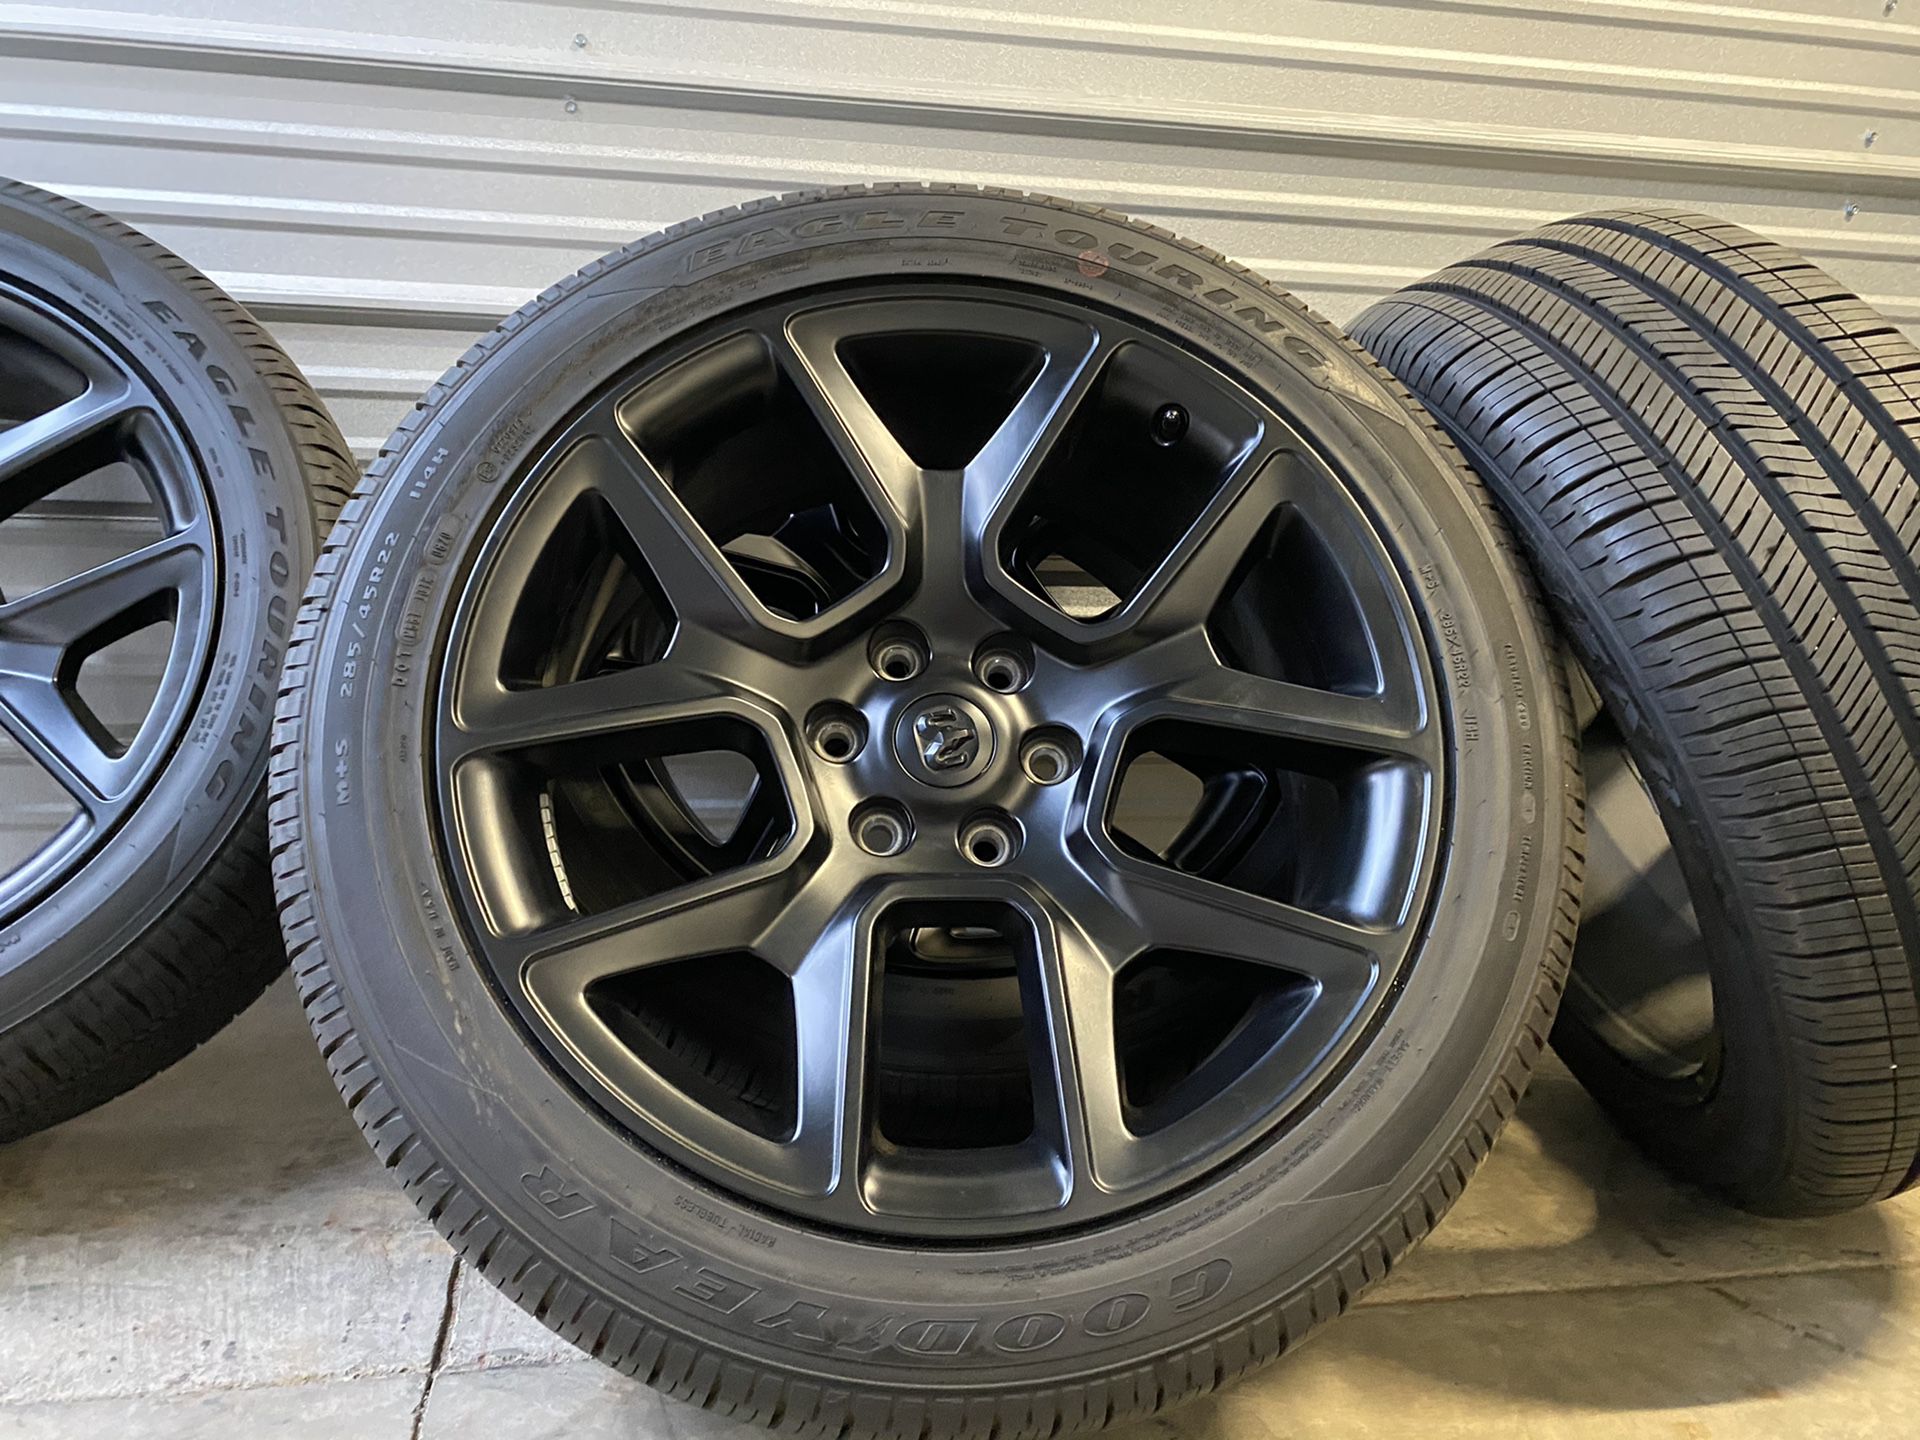 22” Dodge Ram black 2020 1500 Laramie 6 lug factory oem wheels 285/45R22 Goodyear tires rims